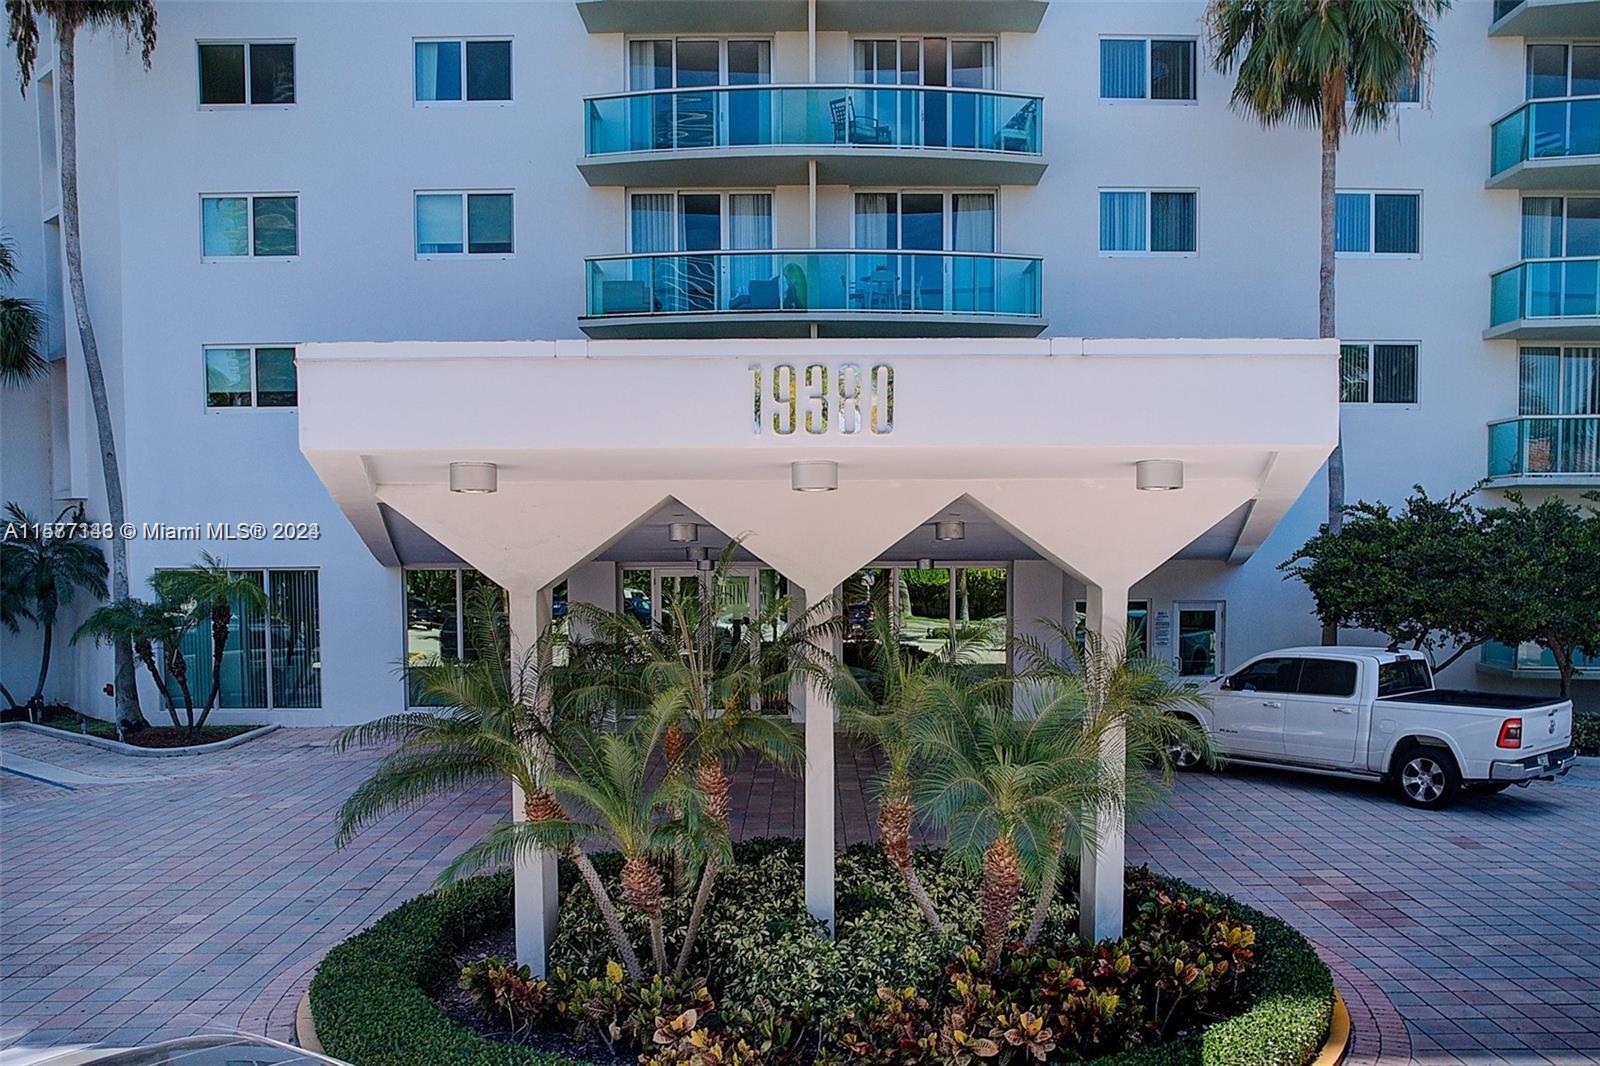 Rental Property at 19380 Collins Ave 802, Sunny Isles Beach, Miami-Dade County, Florida - Bedrooms: 3 
Bathrooms: 2  - $3,450 MO.